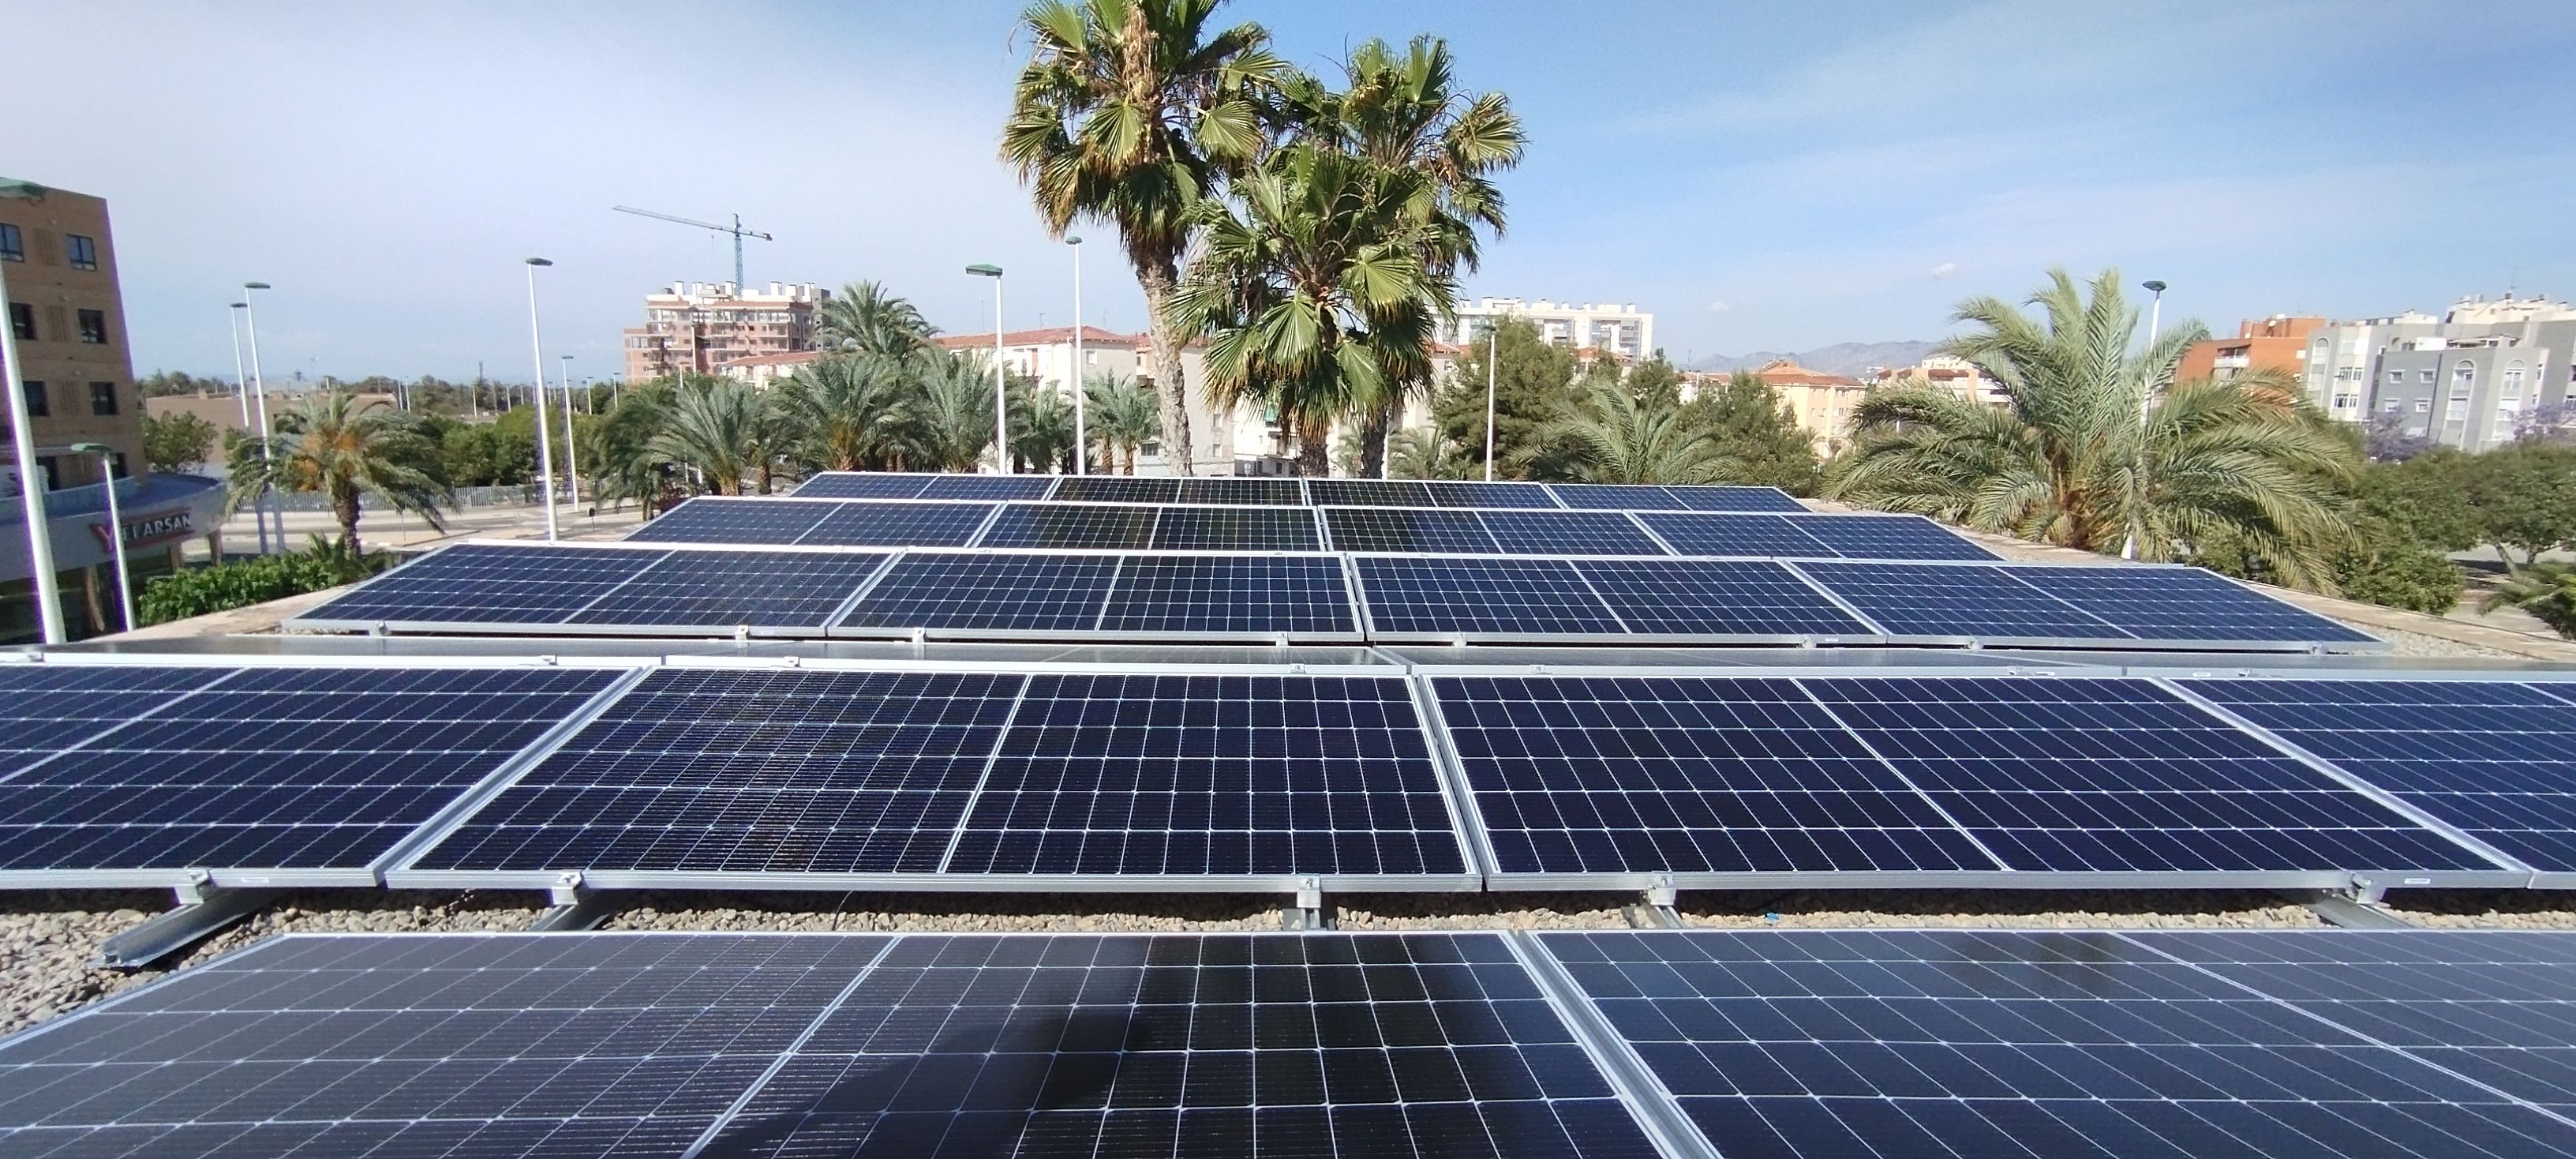 Fotovoltaica compartida aplicada a comunidades y negocios